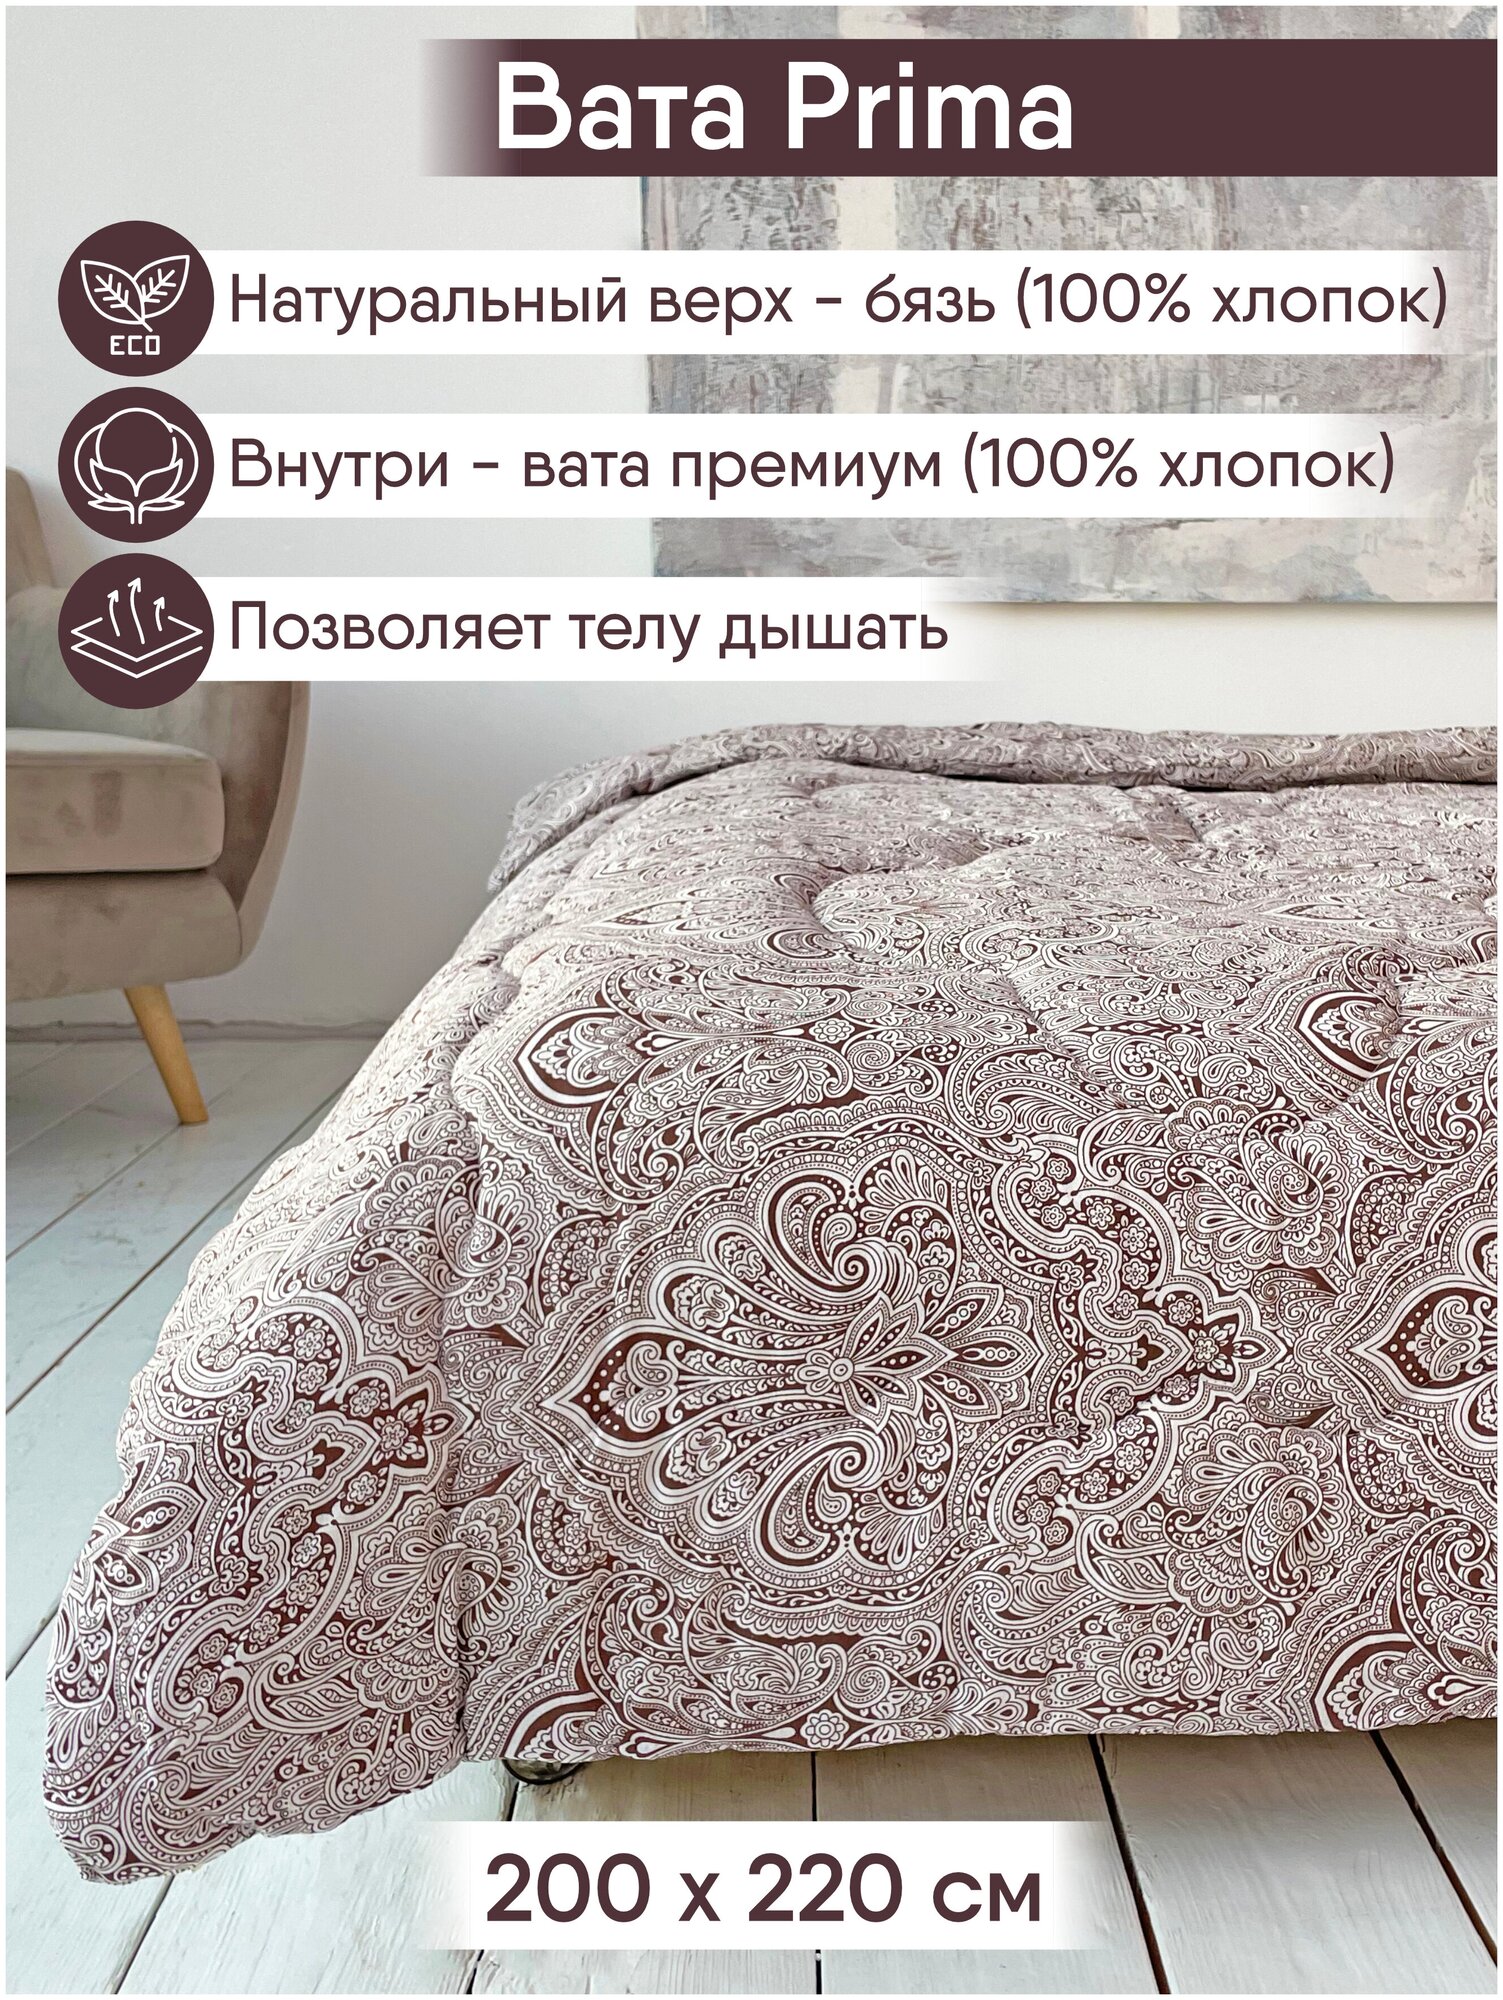 Одеяло Ватное с наполнителем Вата "Прима" Евро (200х220 см), чехол - Бязь эксклюзив - фотография № 2